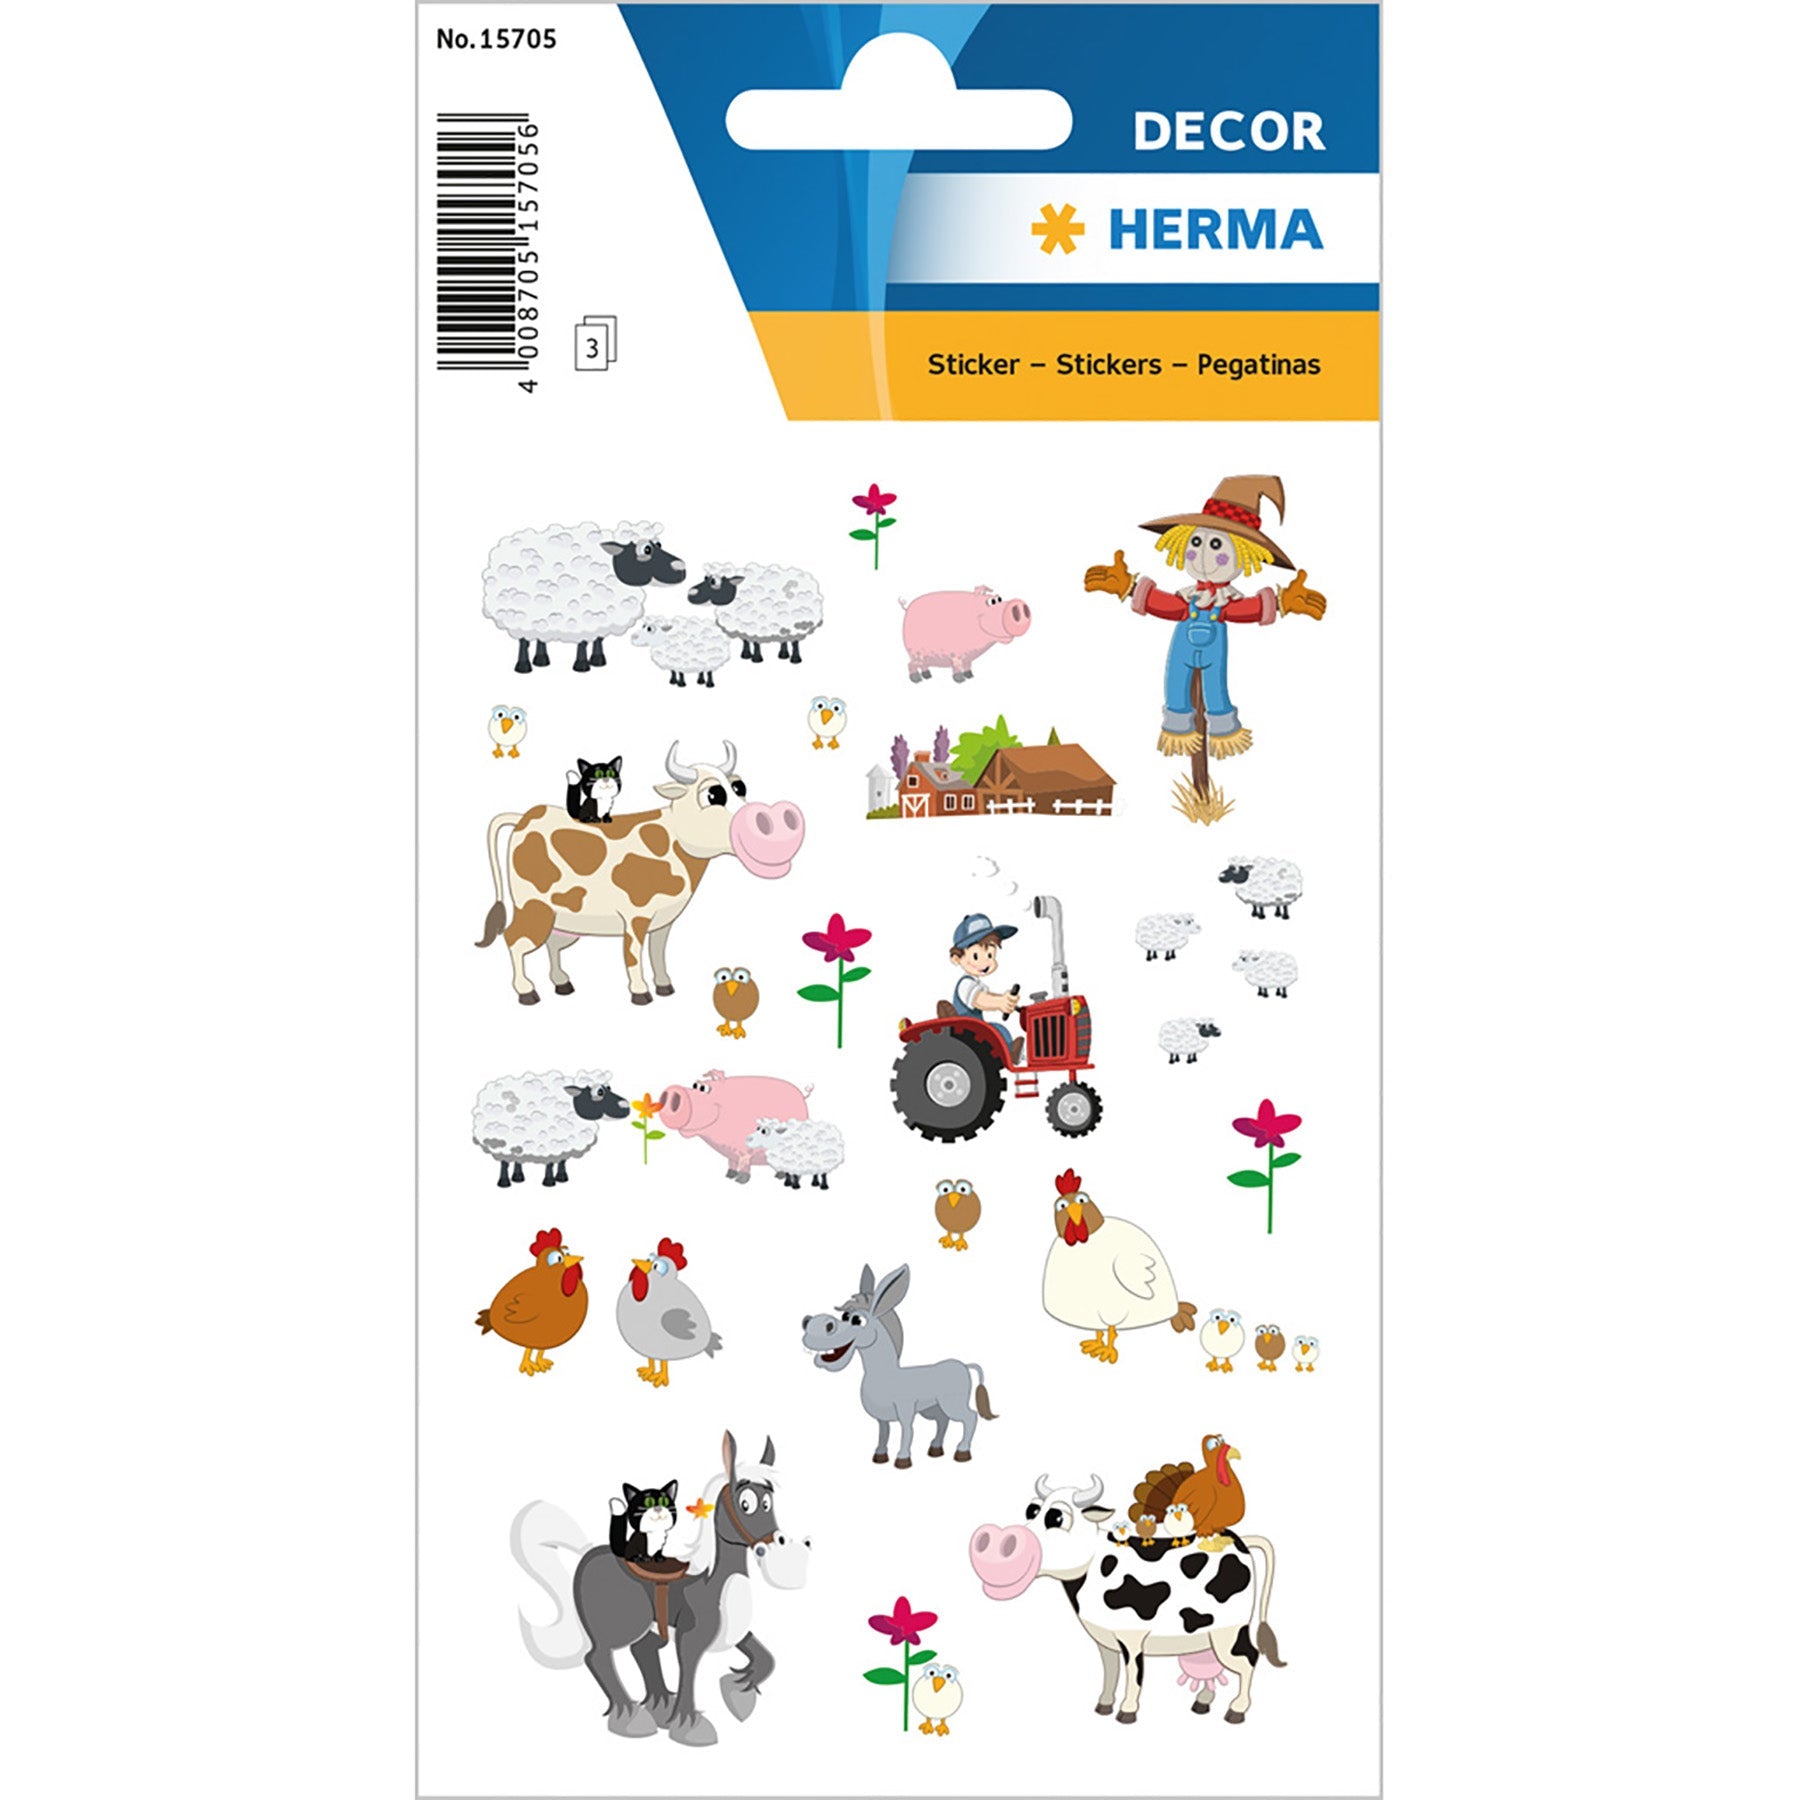 Herma Décor 3 Sheets Stickers Little Farm 4.75x3.1in Sheet